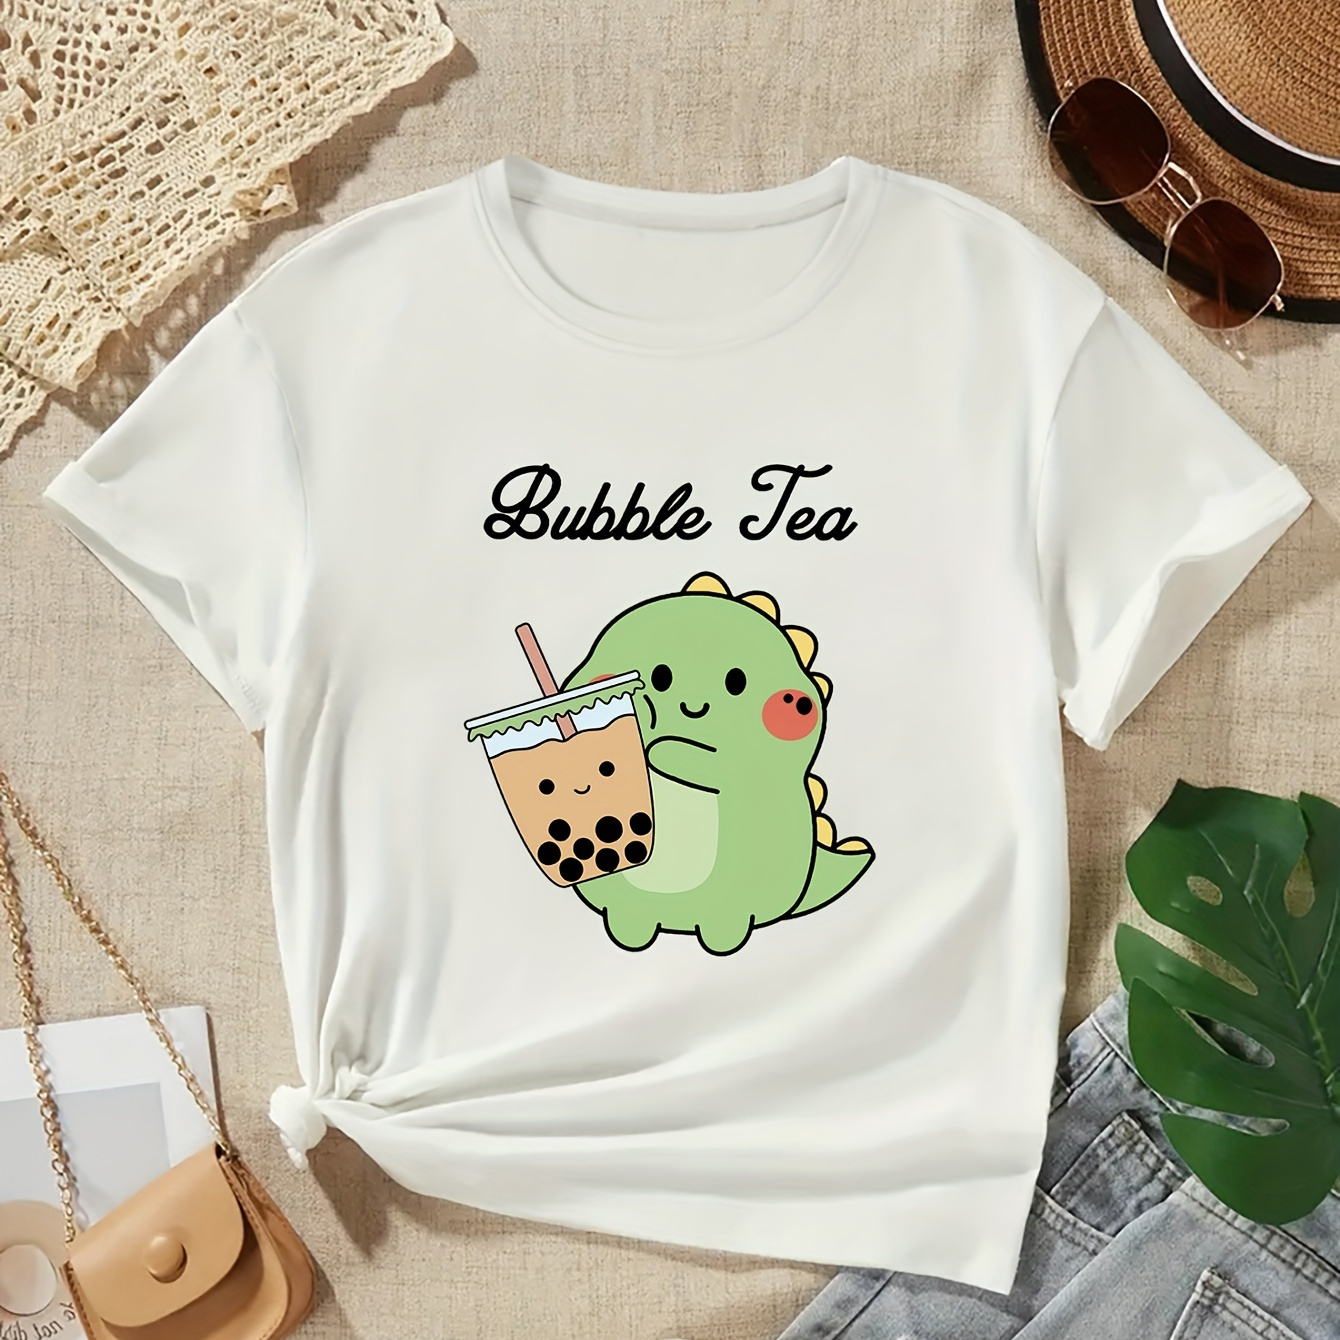 

Cartoon Dinosaur With Bubble Tea Graphic Print, Tween Girls' Casual & Comfy Crew Neck Short Sleeve Tee For Spring & Summer, Tween Girls' Clothes For Outdoor Activities